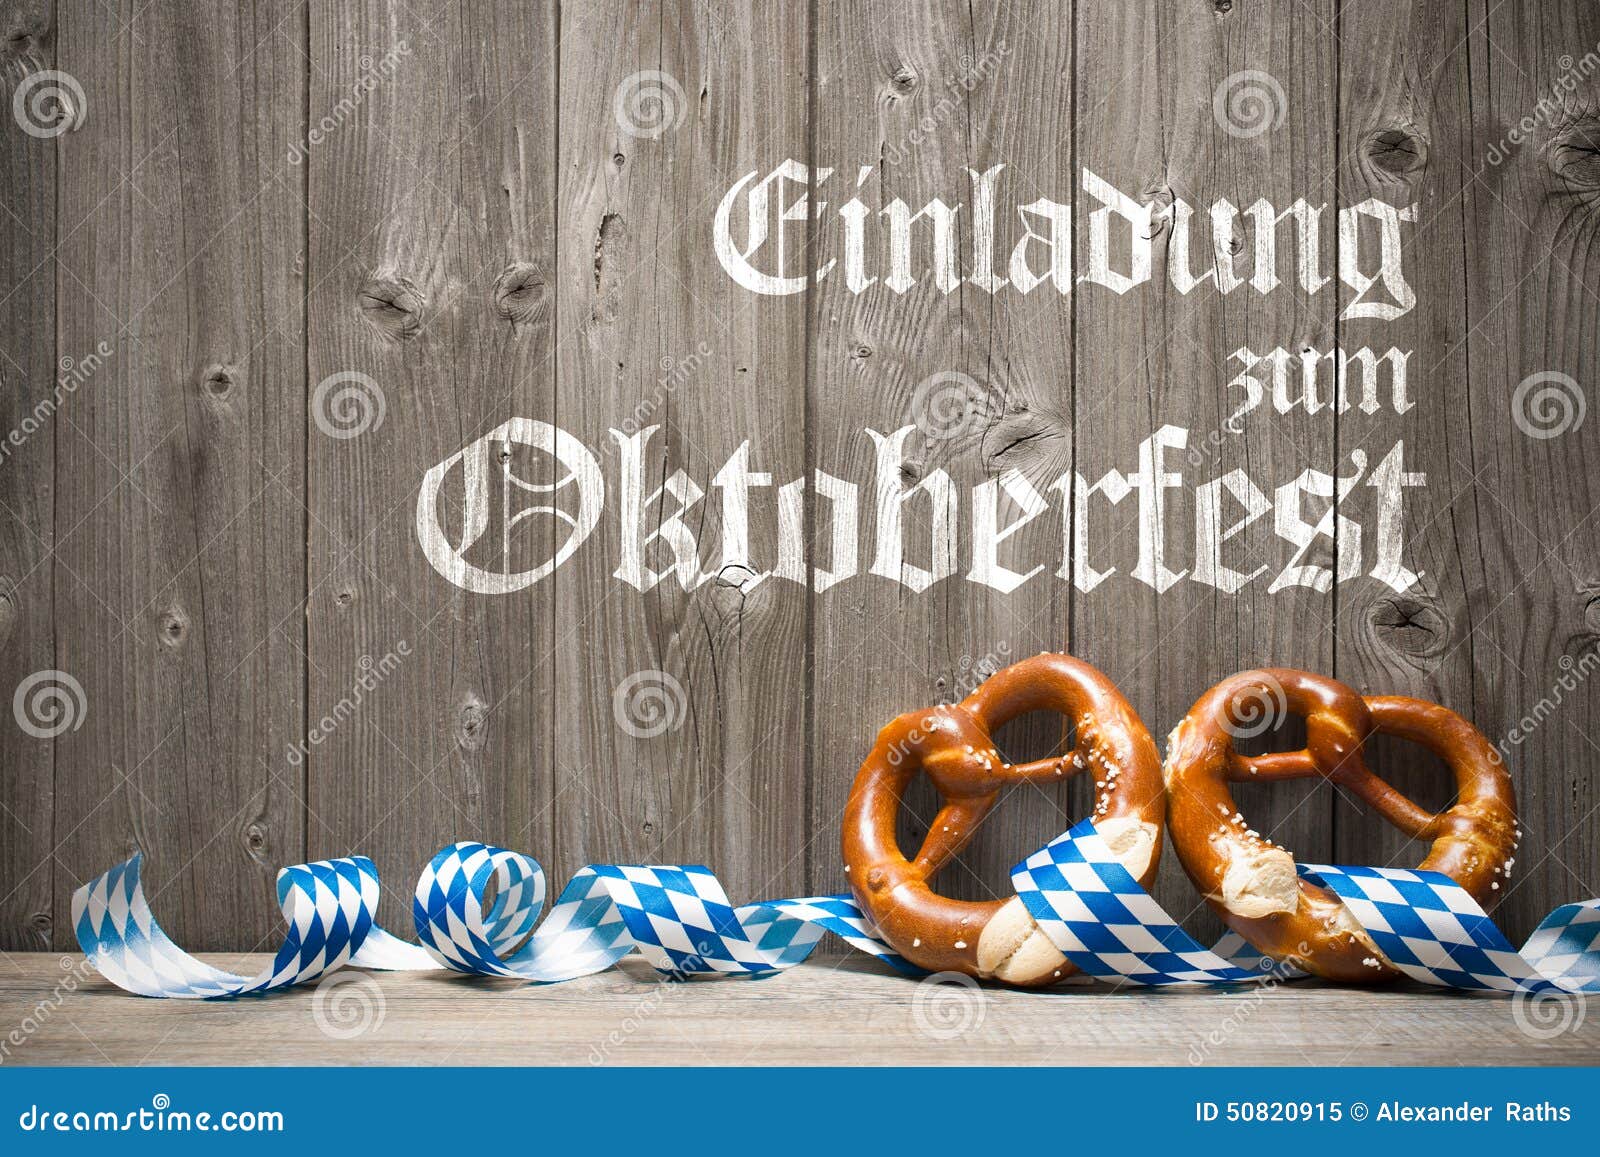 Background For Oktoberfest Editorial Image Image Of Celebrate